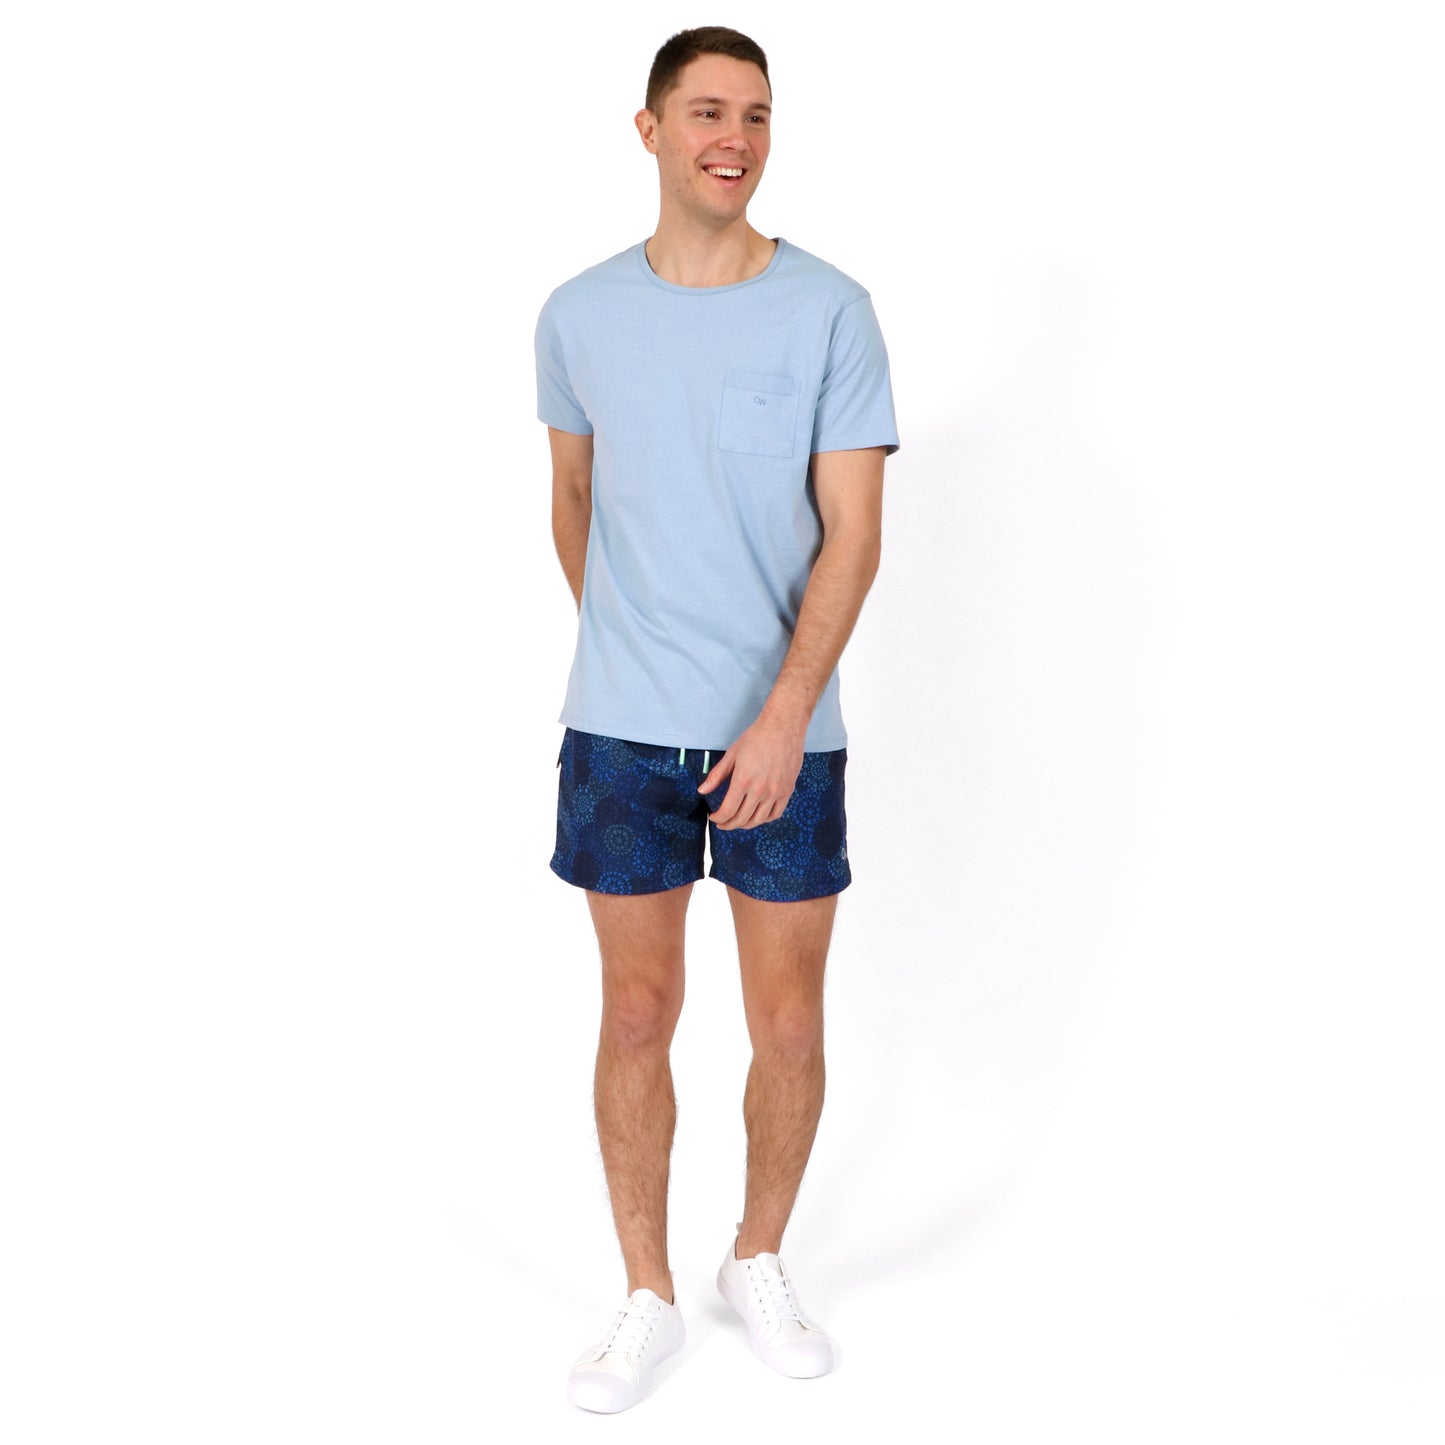 OWTS2101 Steel Fade Blue Essential Beach T-Shirt and OWSS2102 Navy Spot Print Swim Short outfit